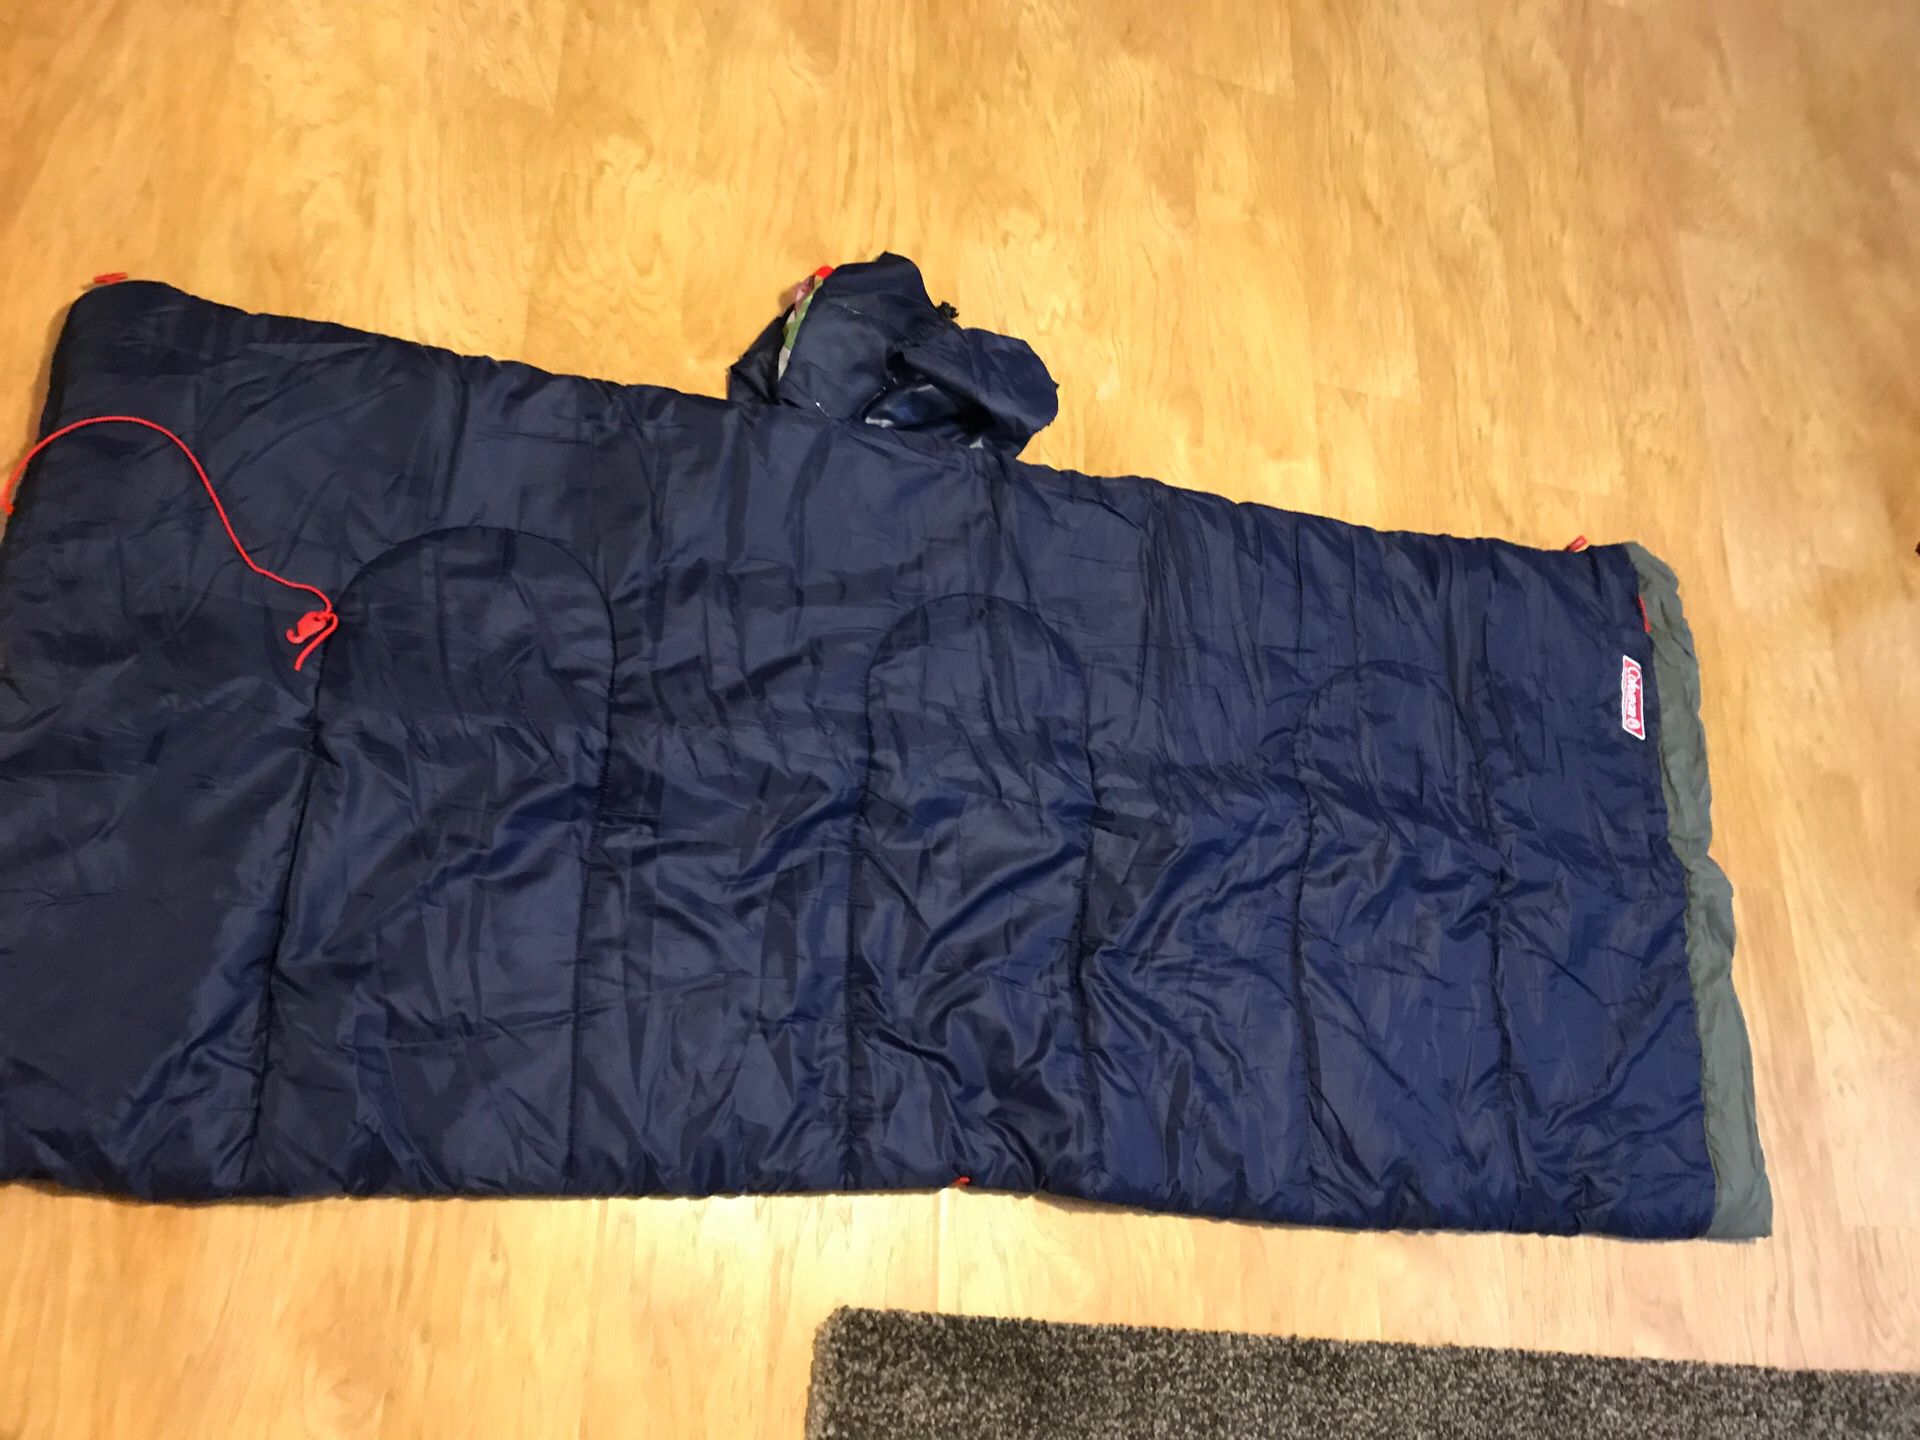 Coleman 40 degree sleeping bag, dark blue/grey